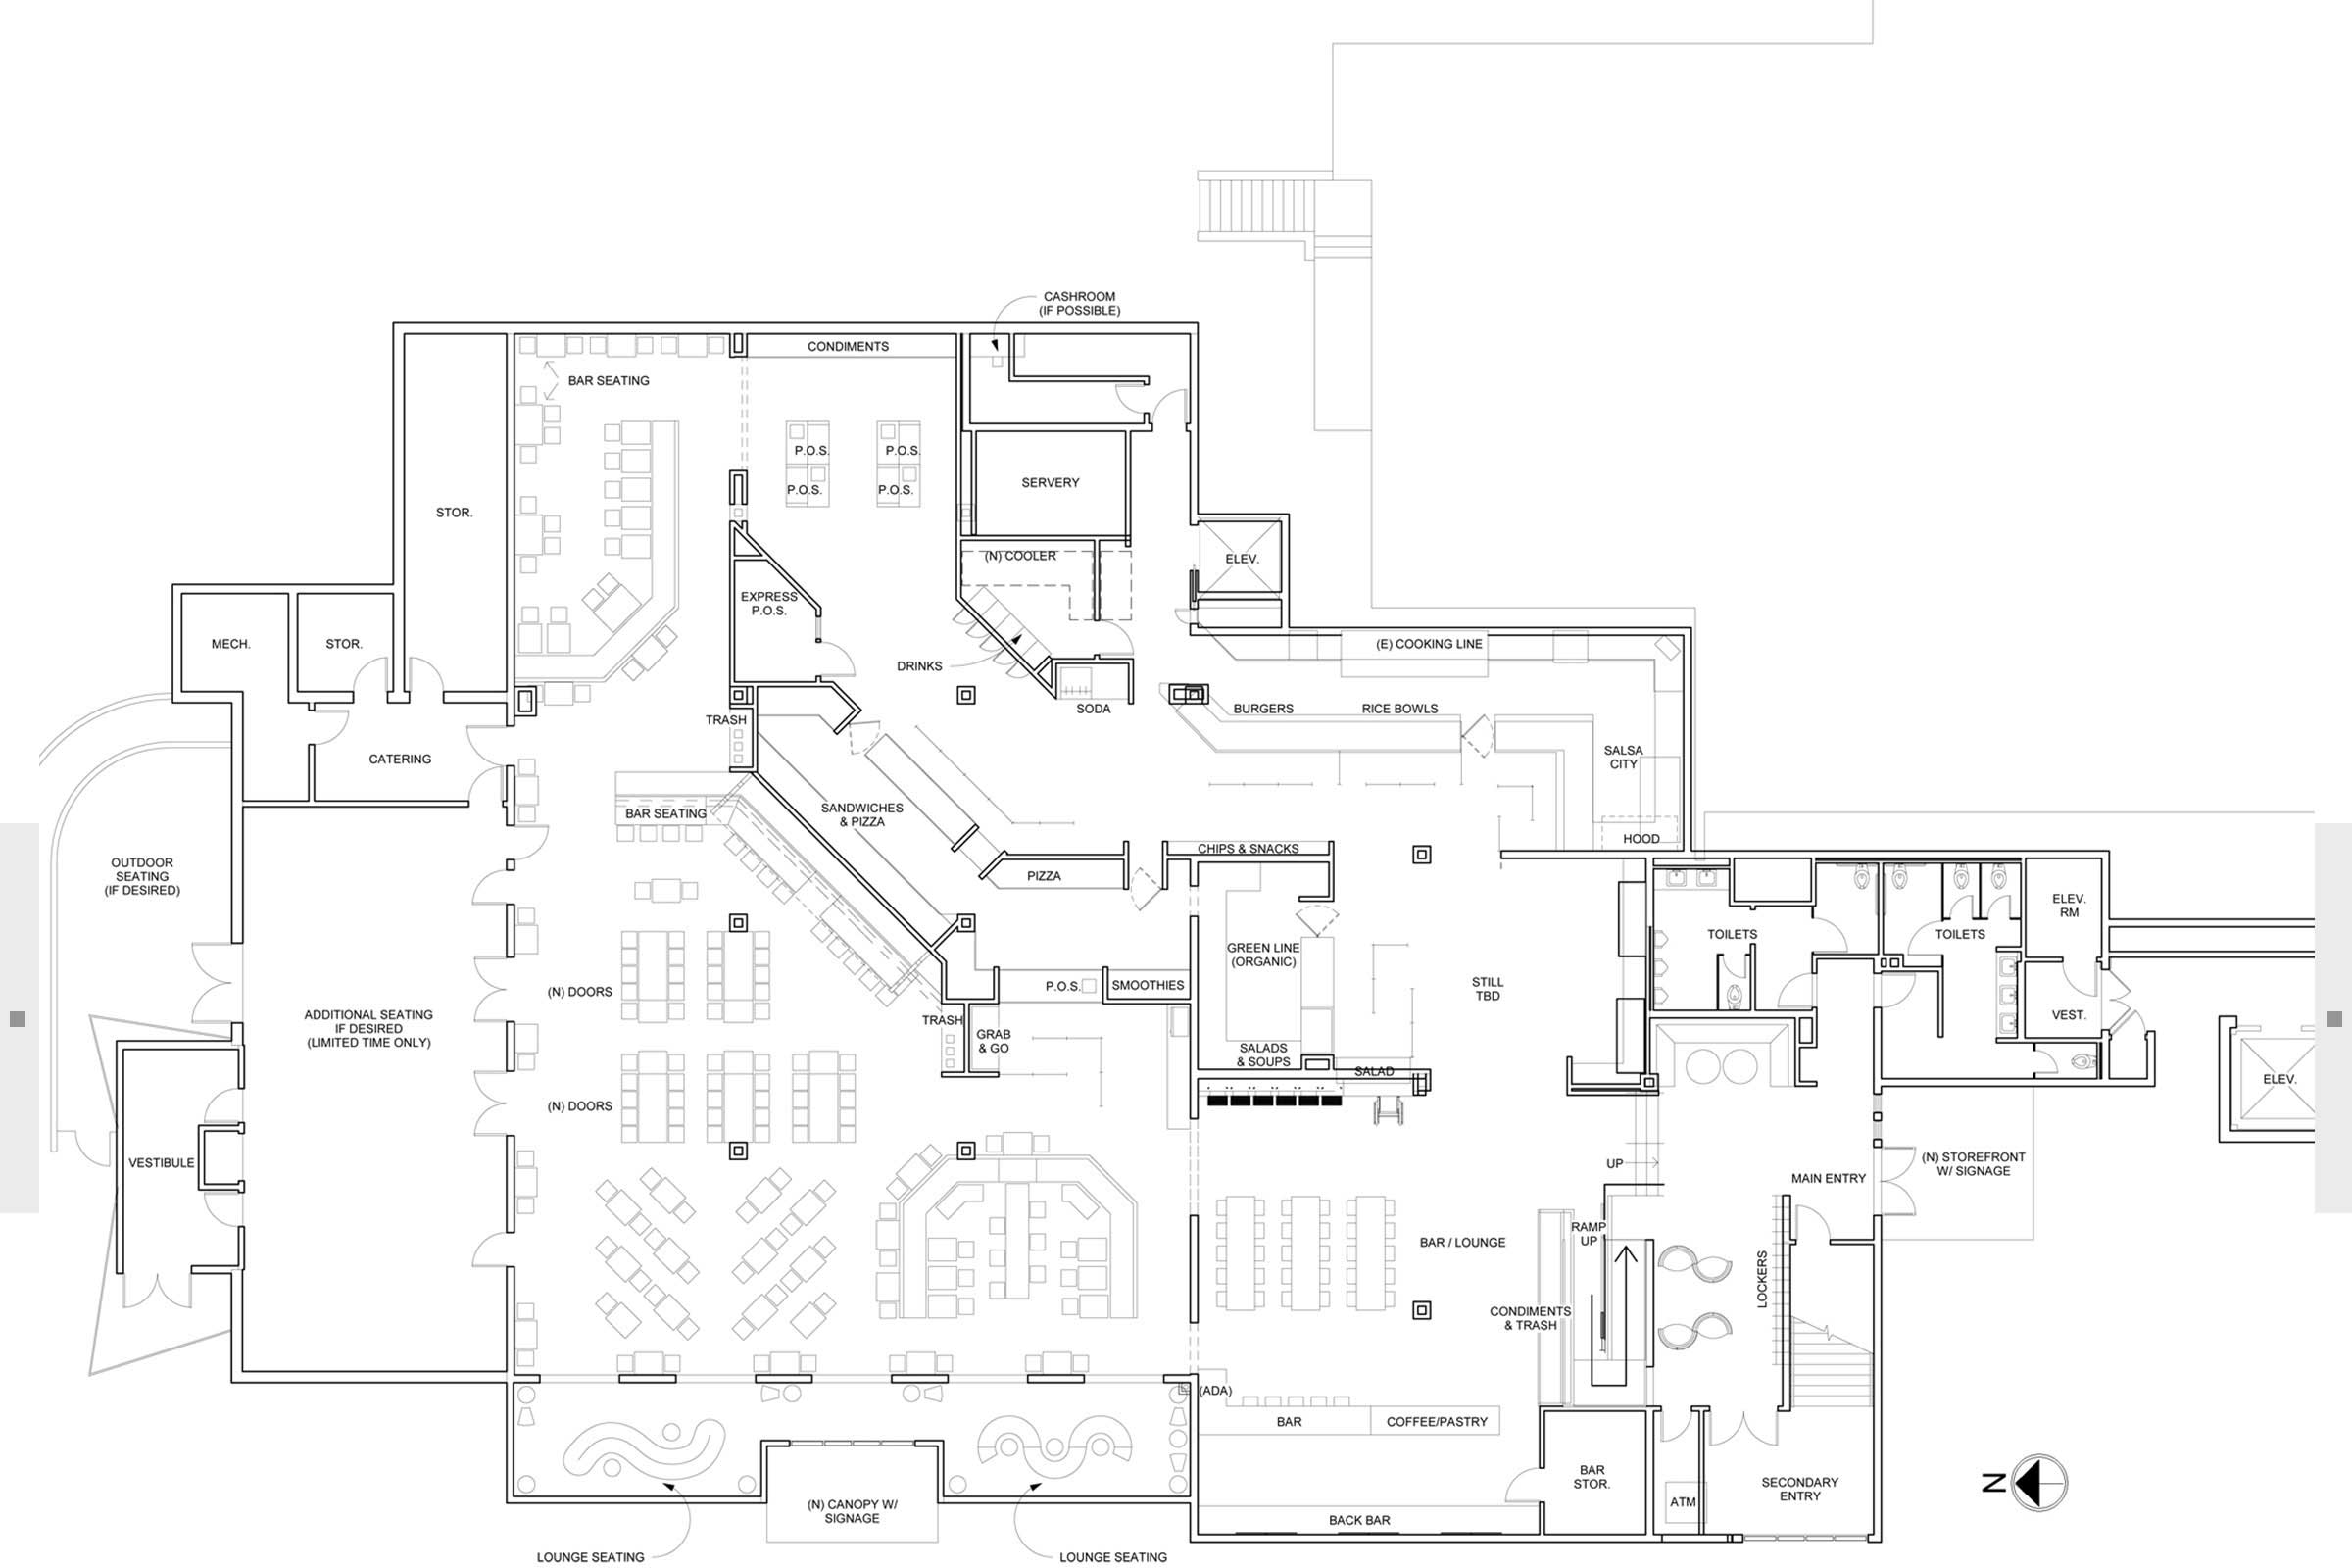 university sketch office blueprint